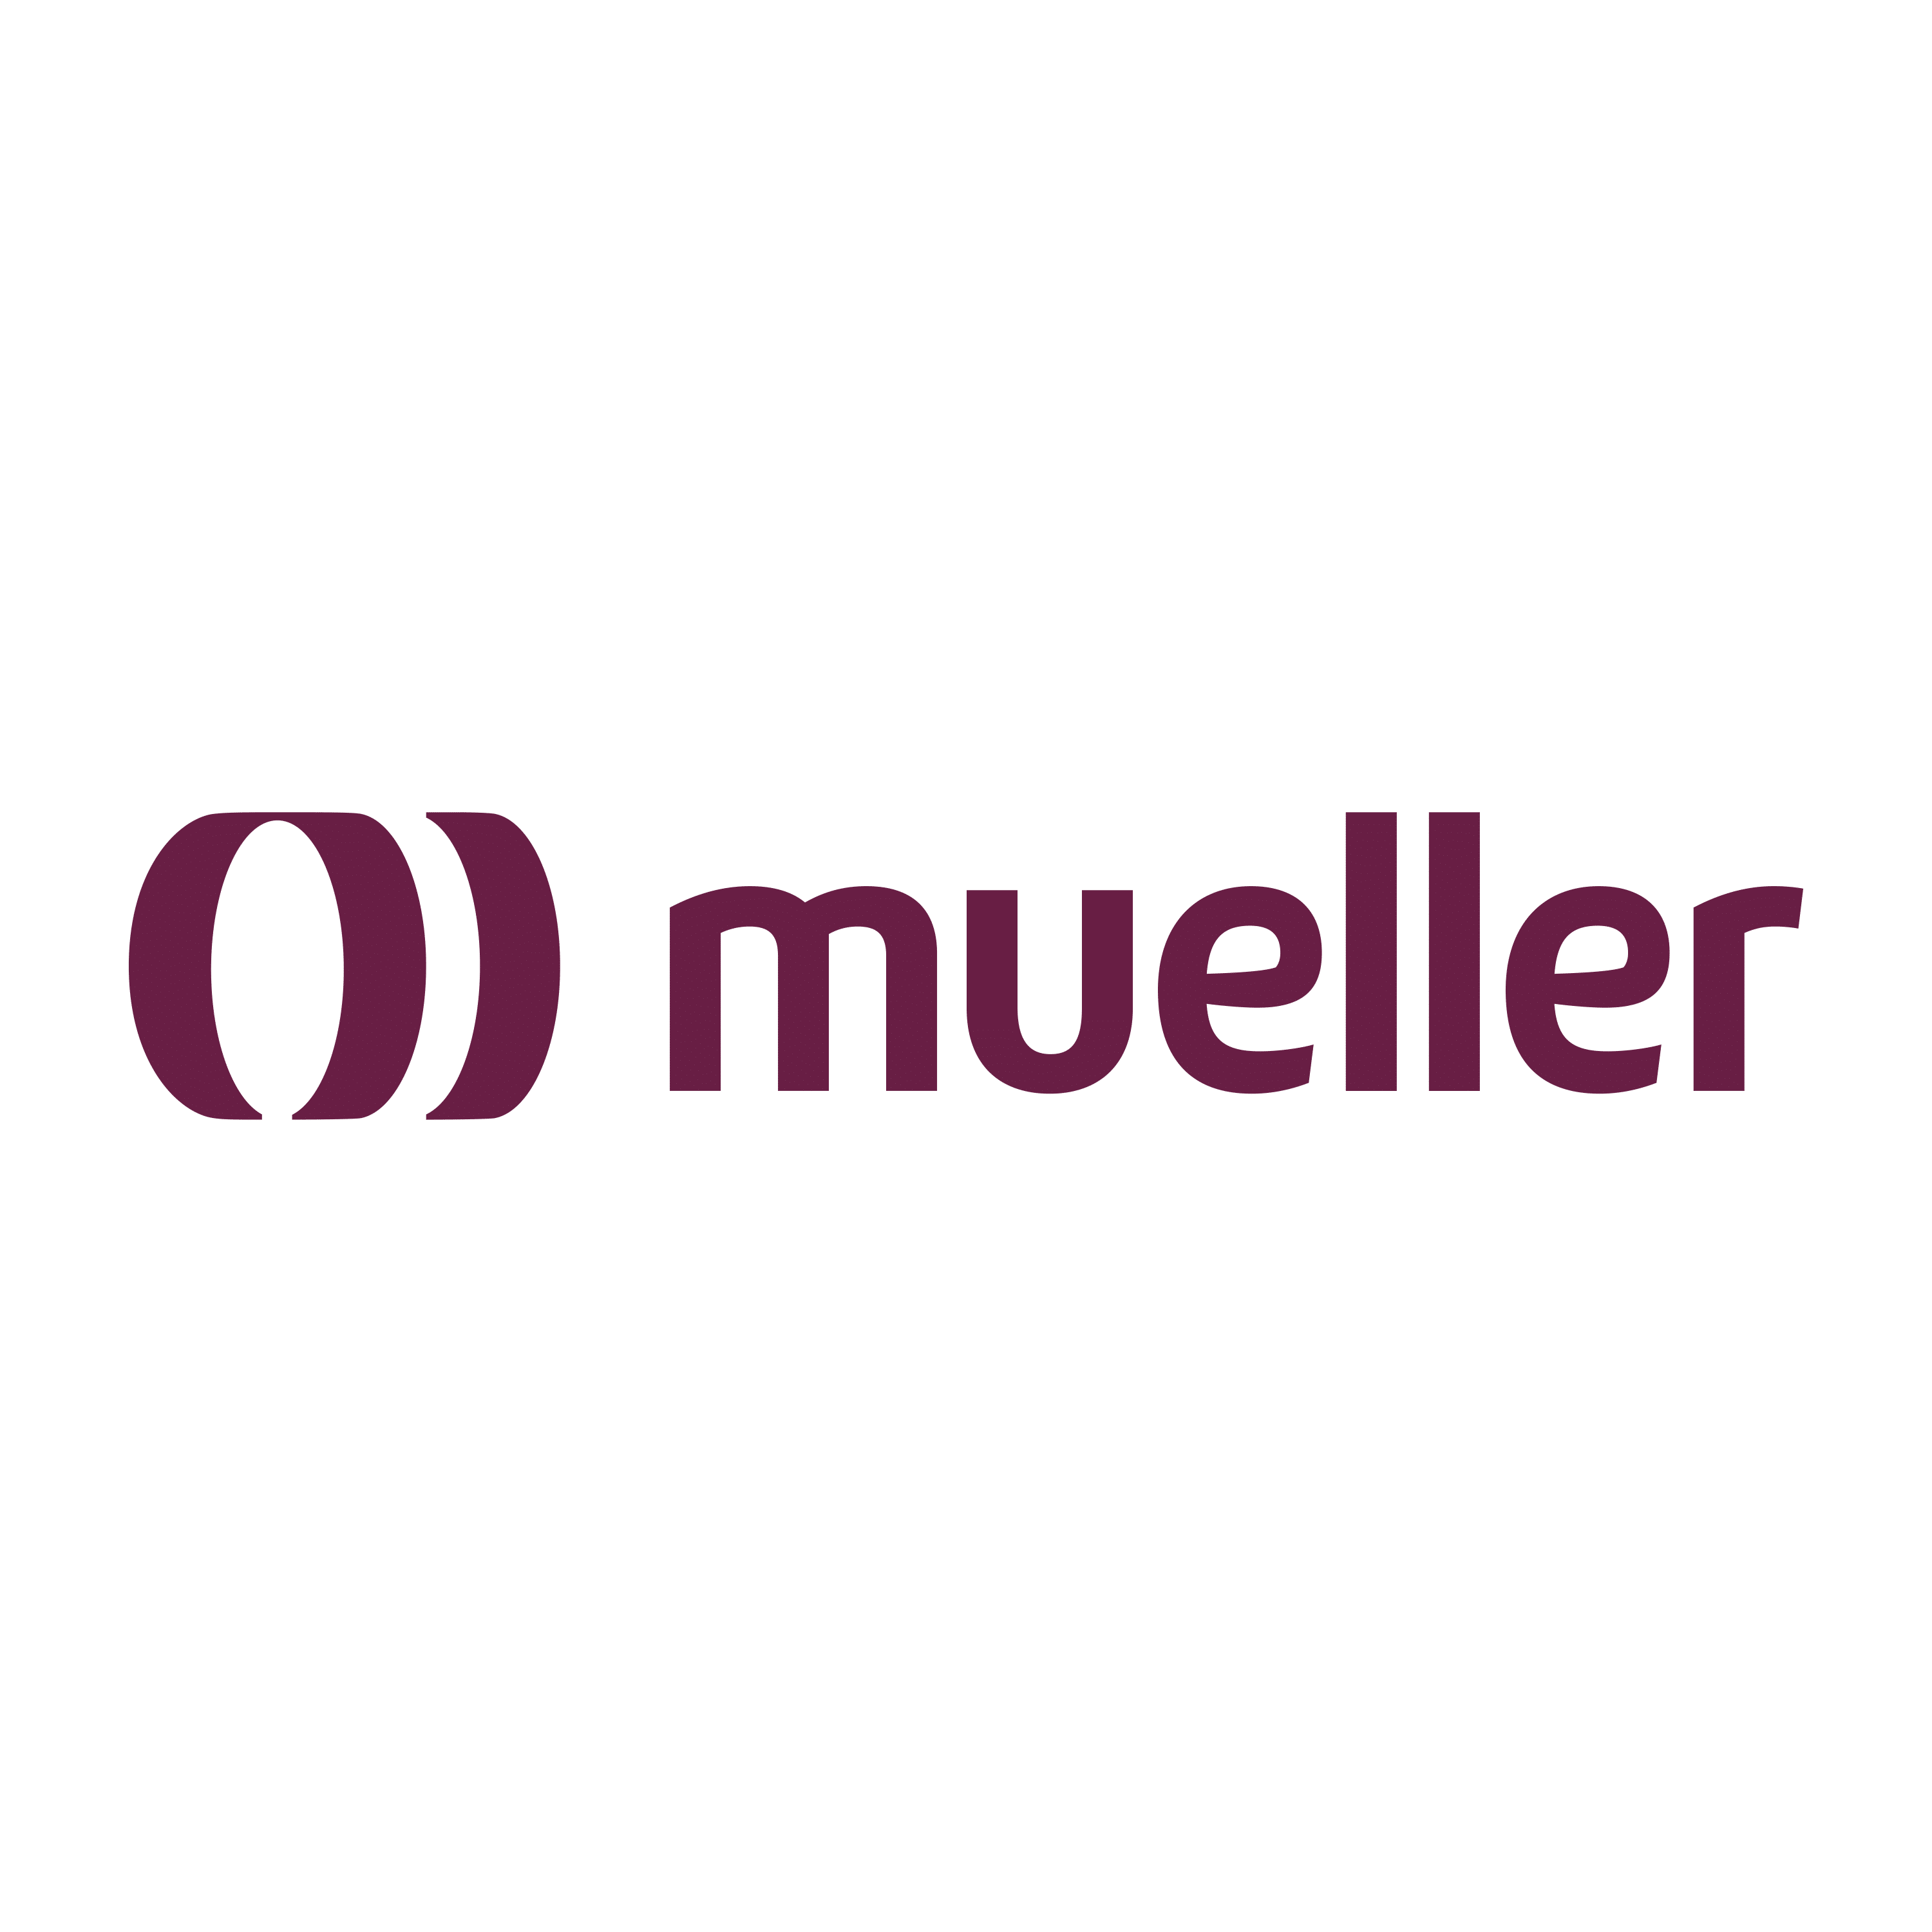 Mueller - LOGO-1